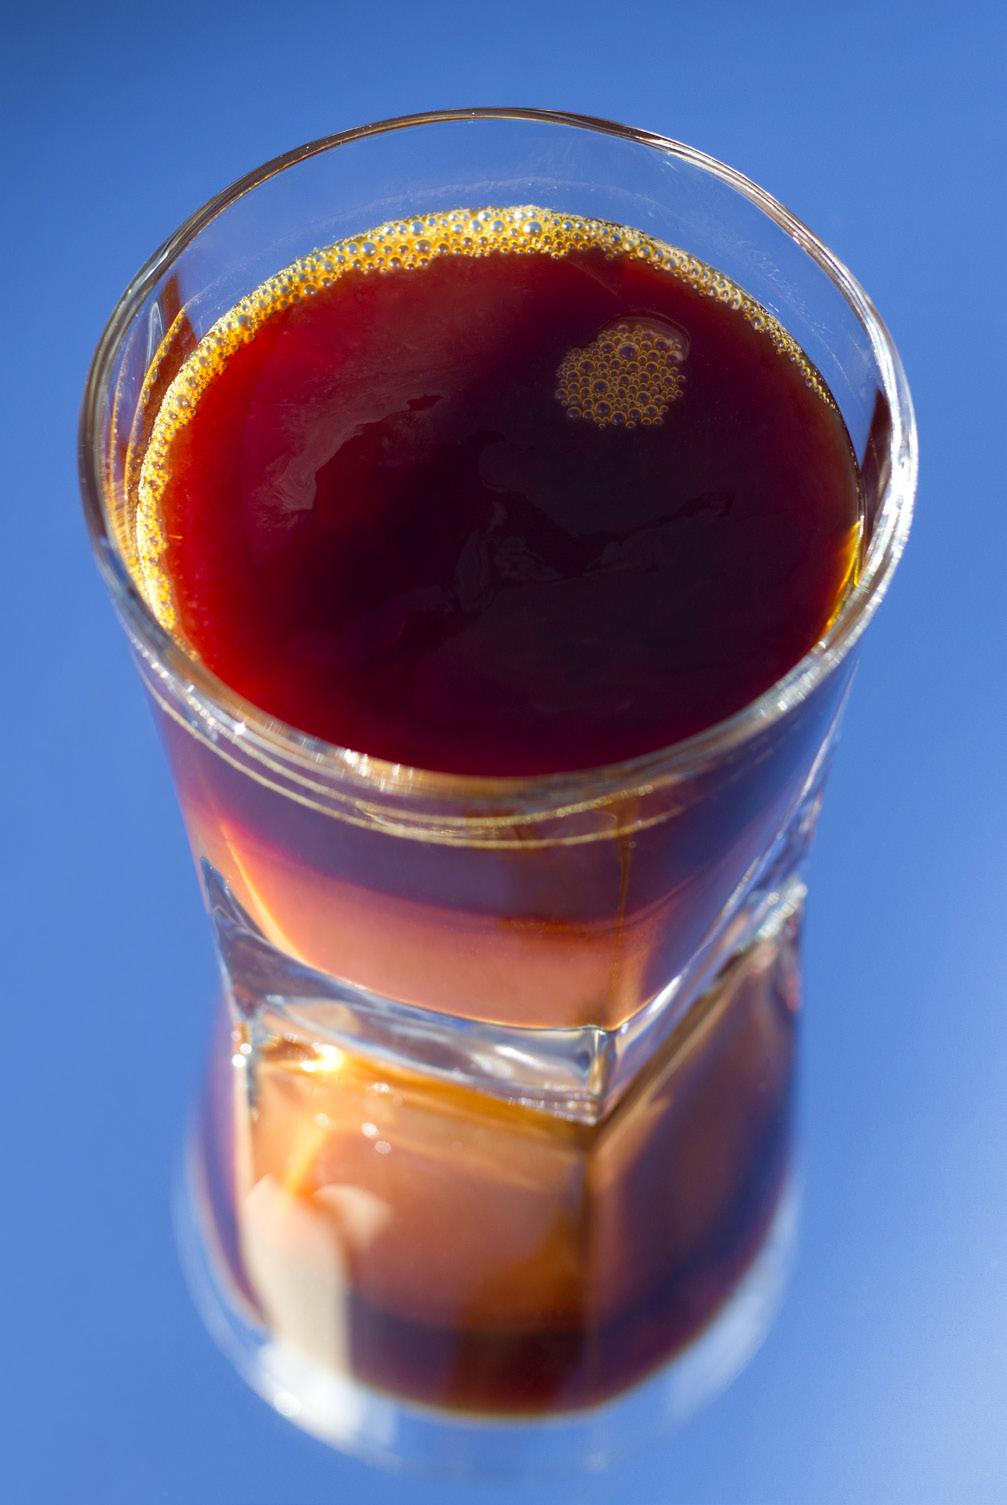 Yield: 1, 8 oz. Drink Caramel Apple Tea 32 grams of Red Espresso ½ oz.